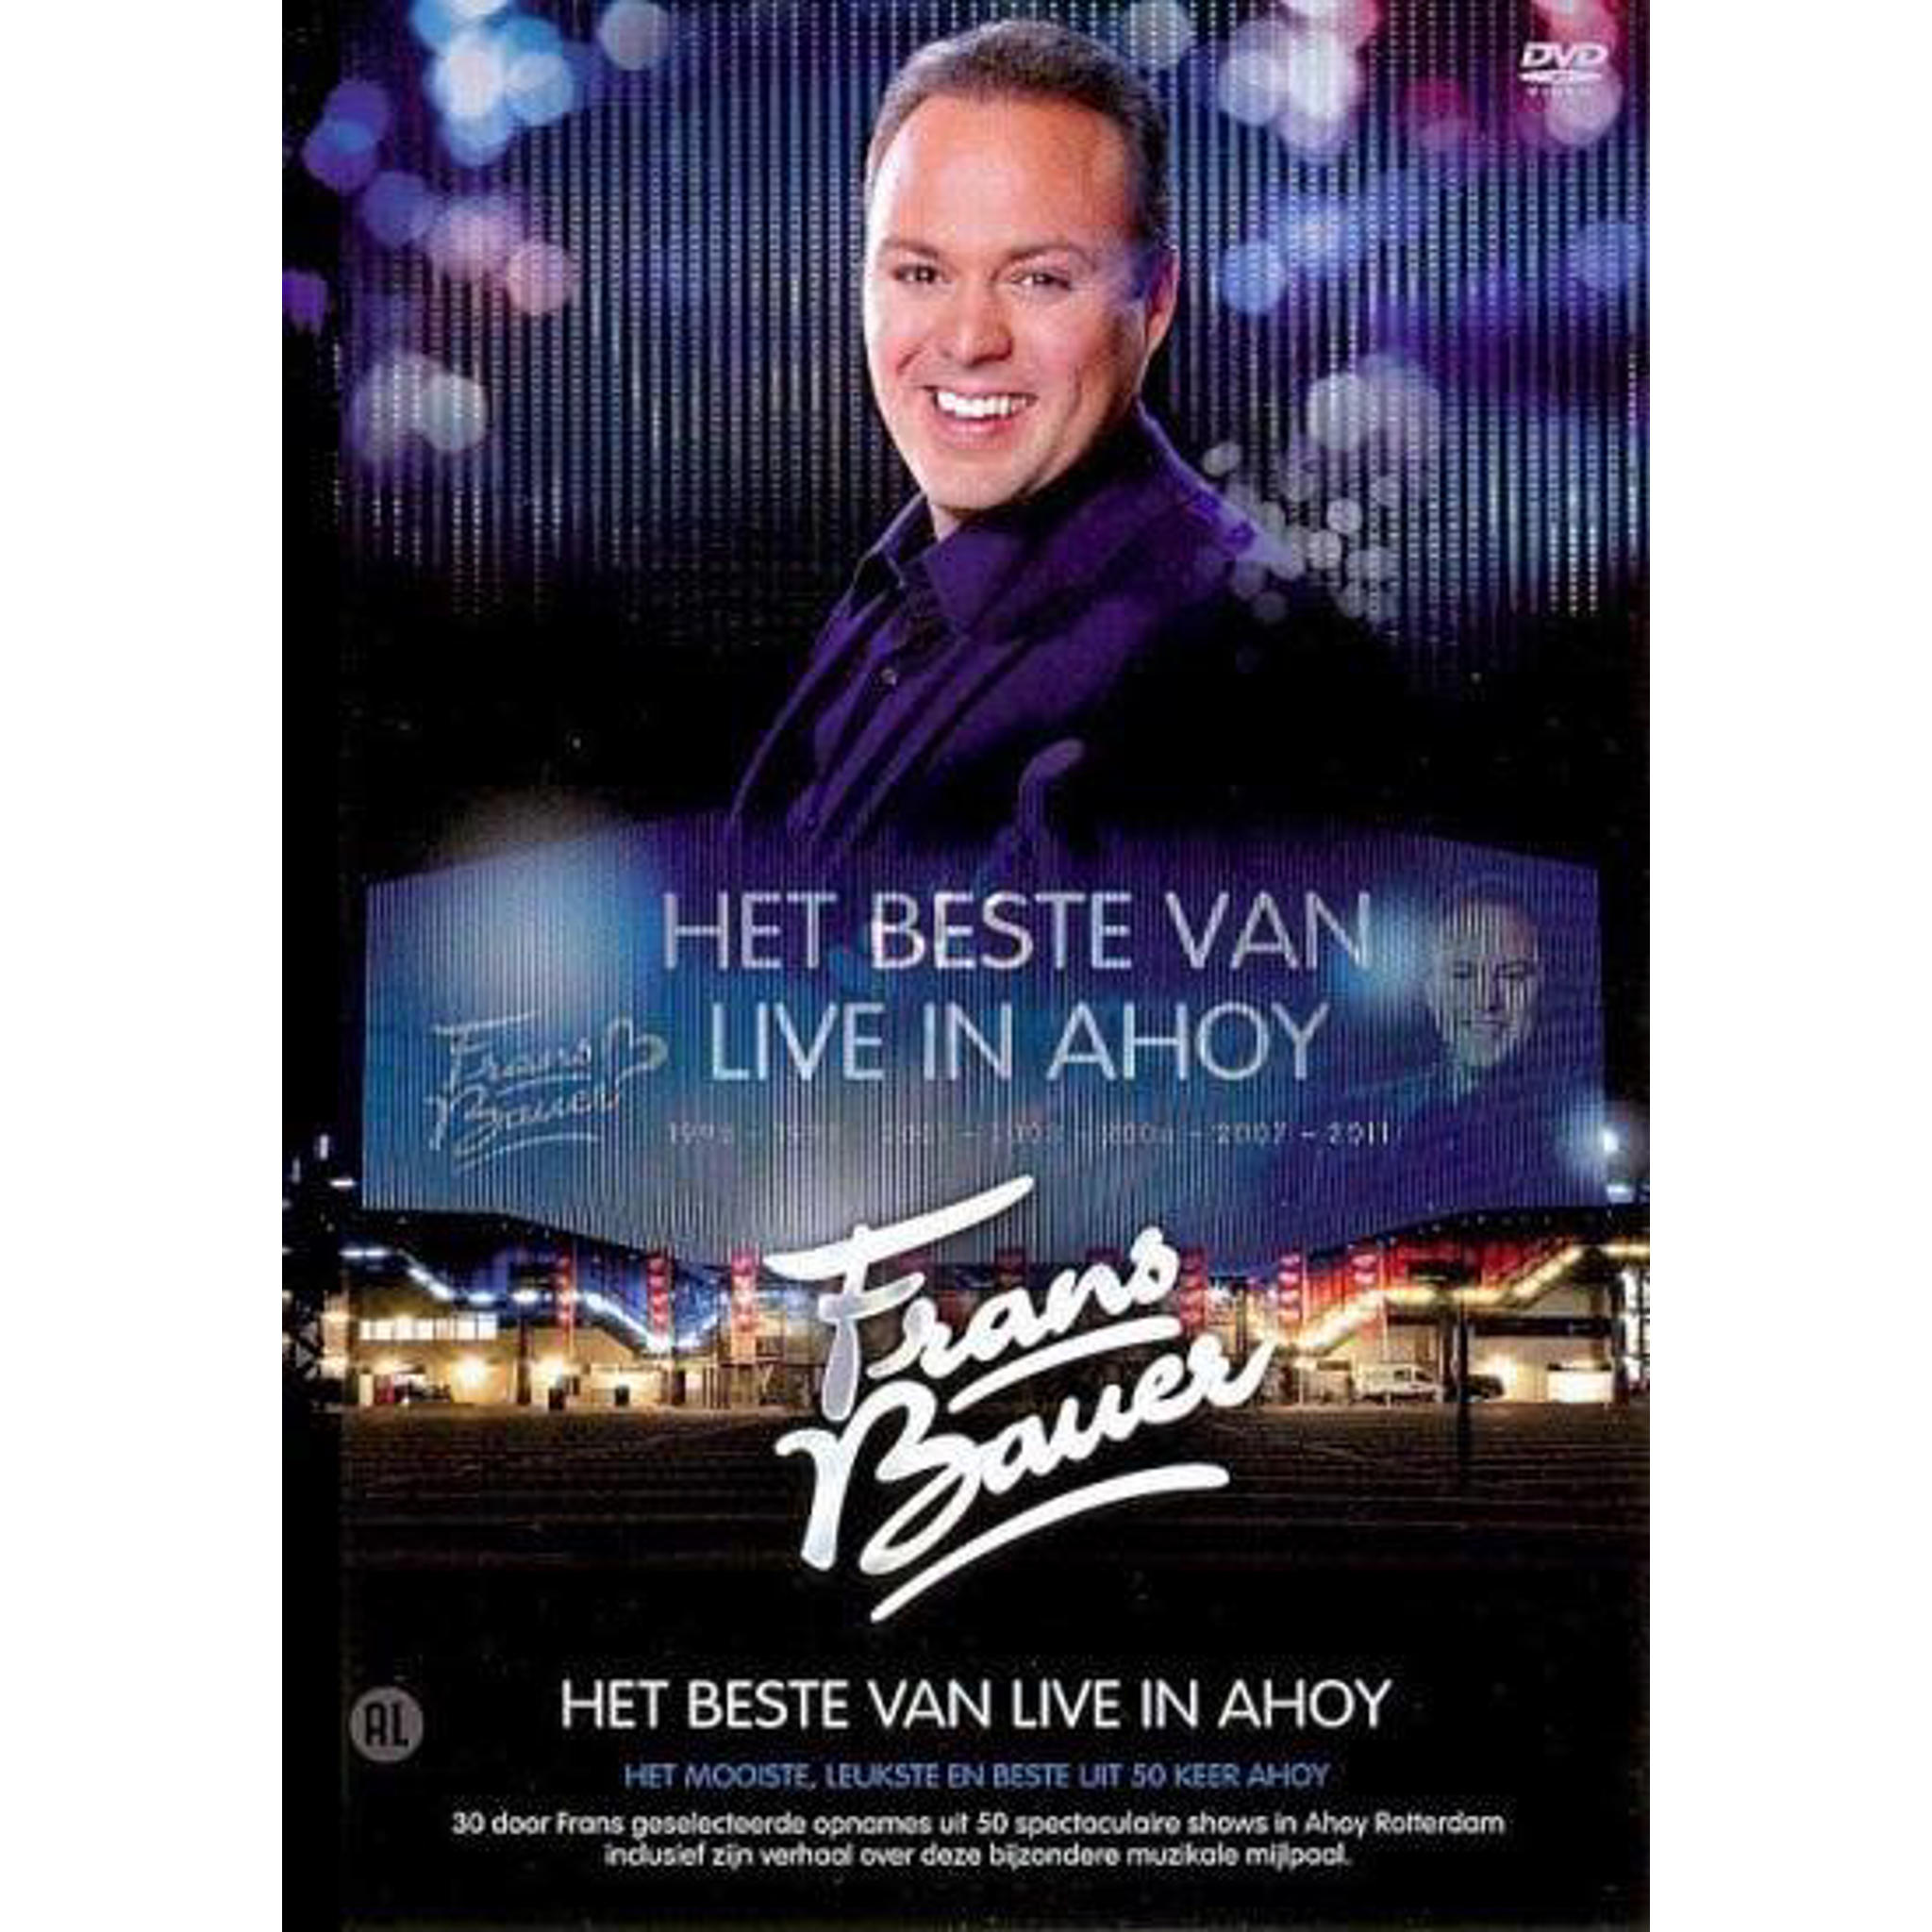 Frans Bauer Het Beste Van Live In Ahoy Dvd 0602527998022 ?w=2048&h=2048&qlt=75&fit=contain